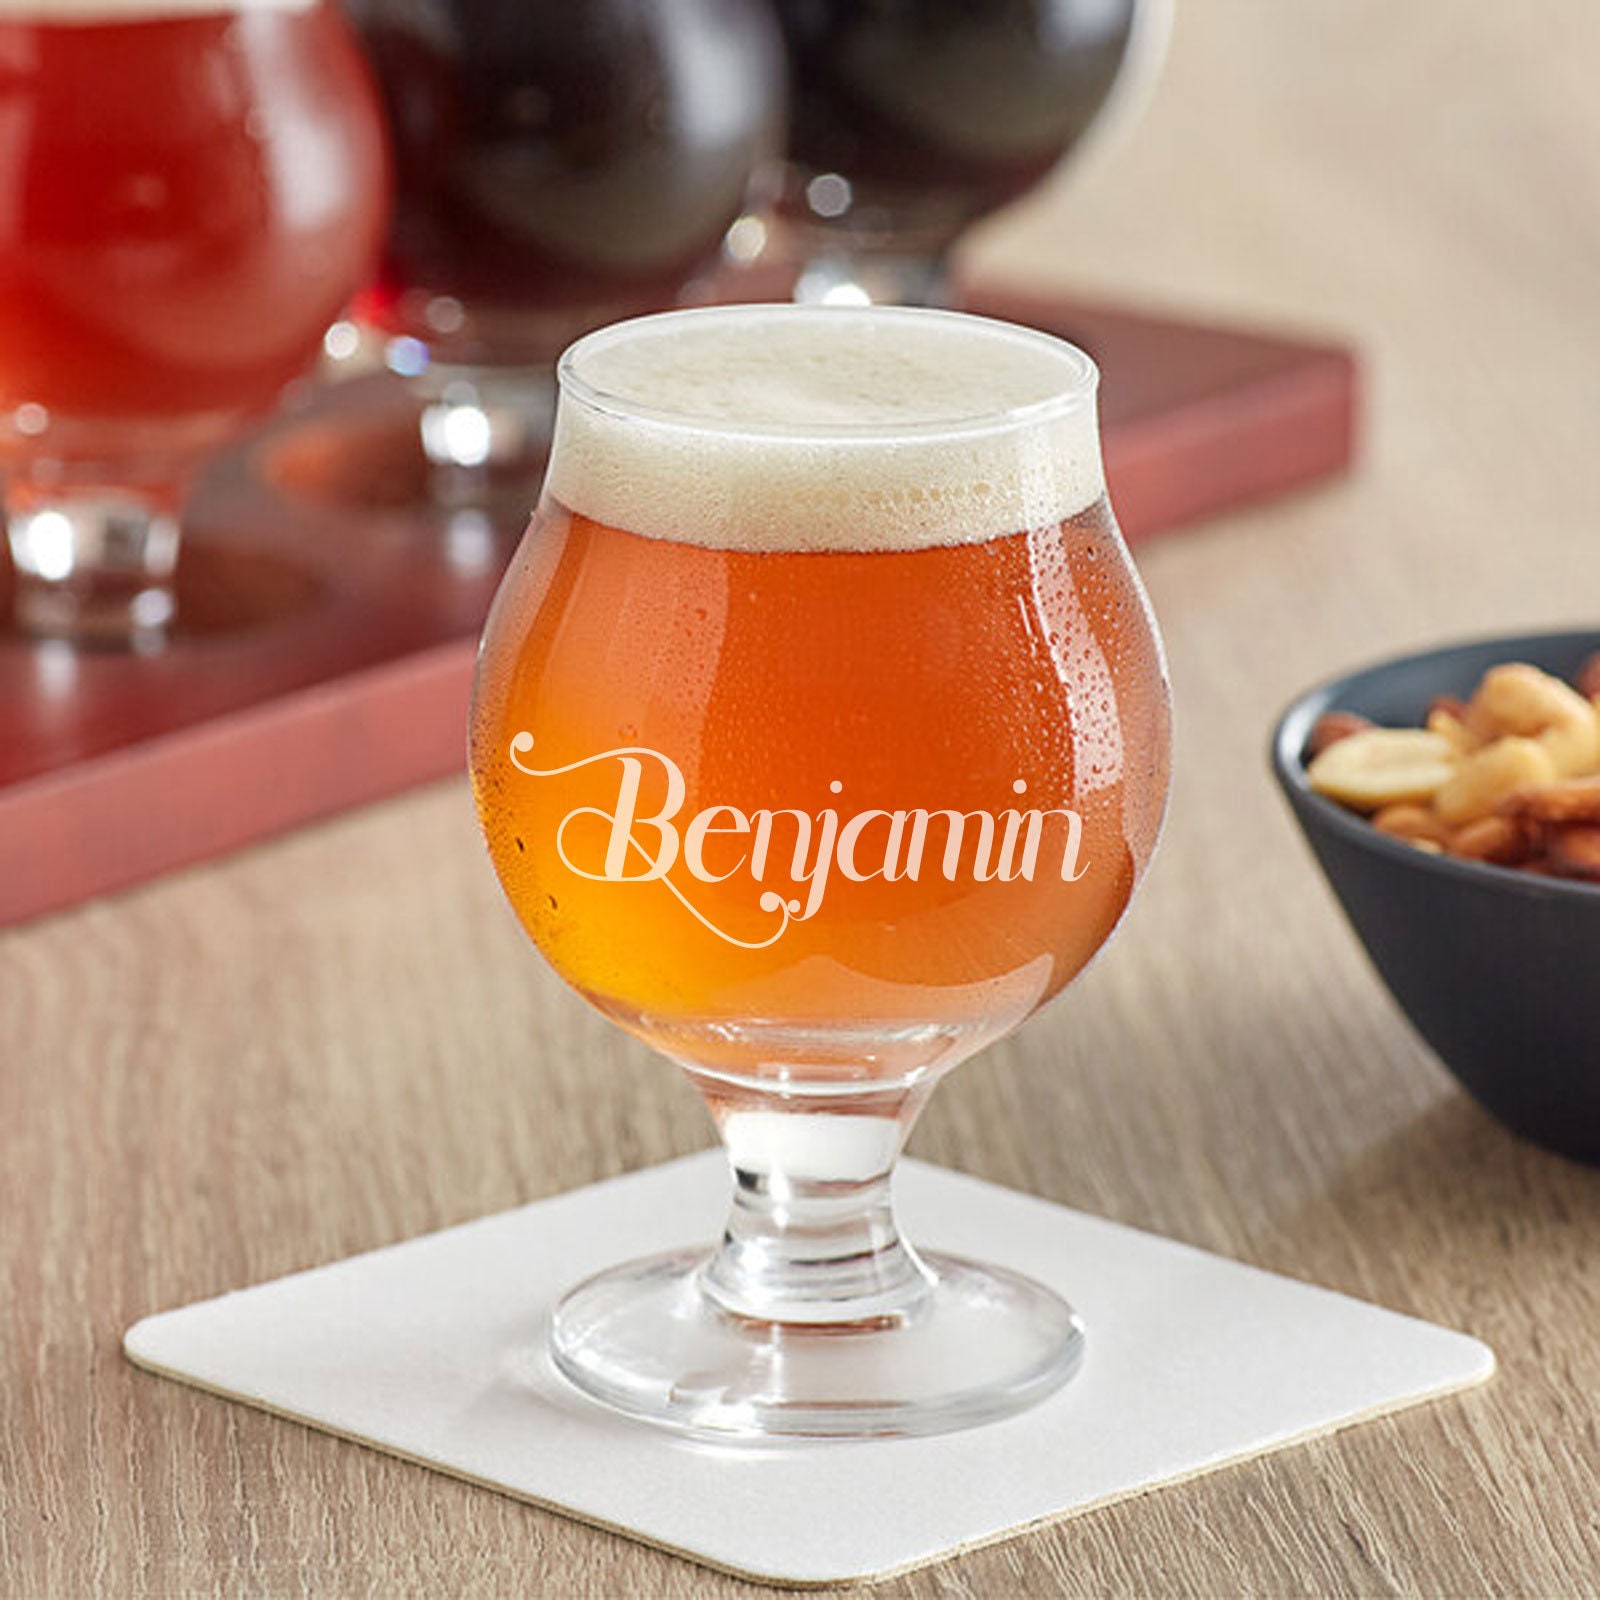 Cheers® Set of 4 Belgian Beer Goblet Glasses